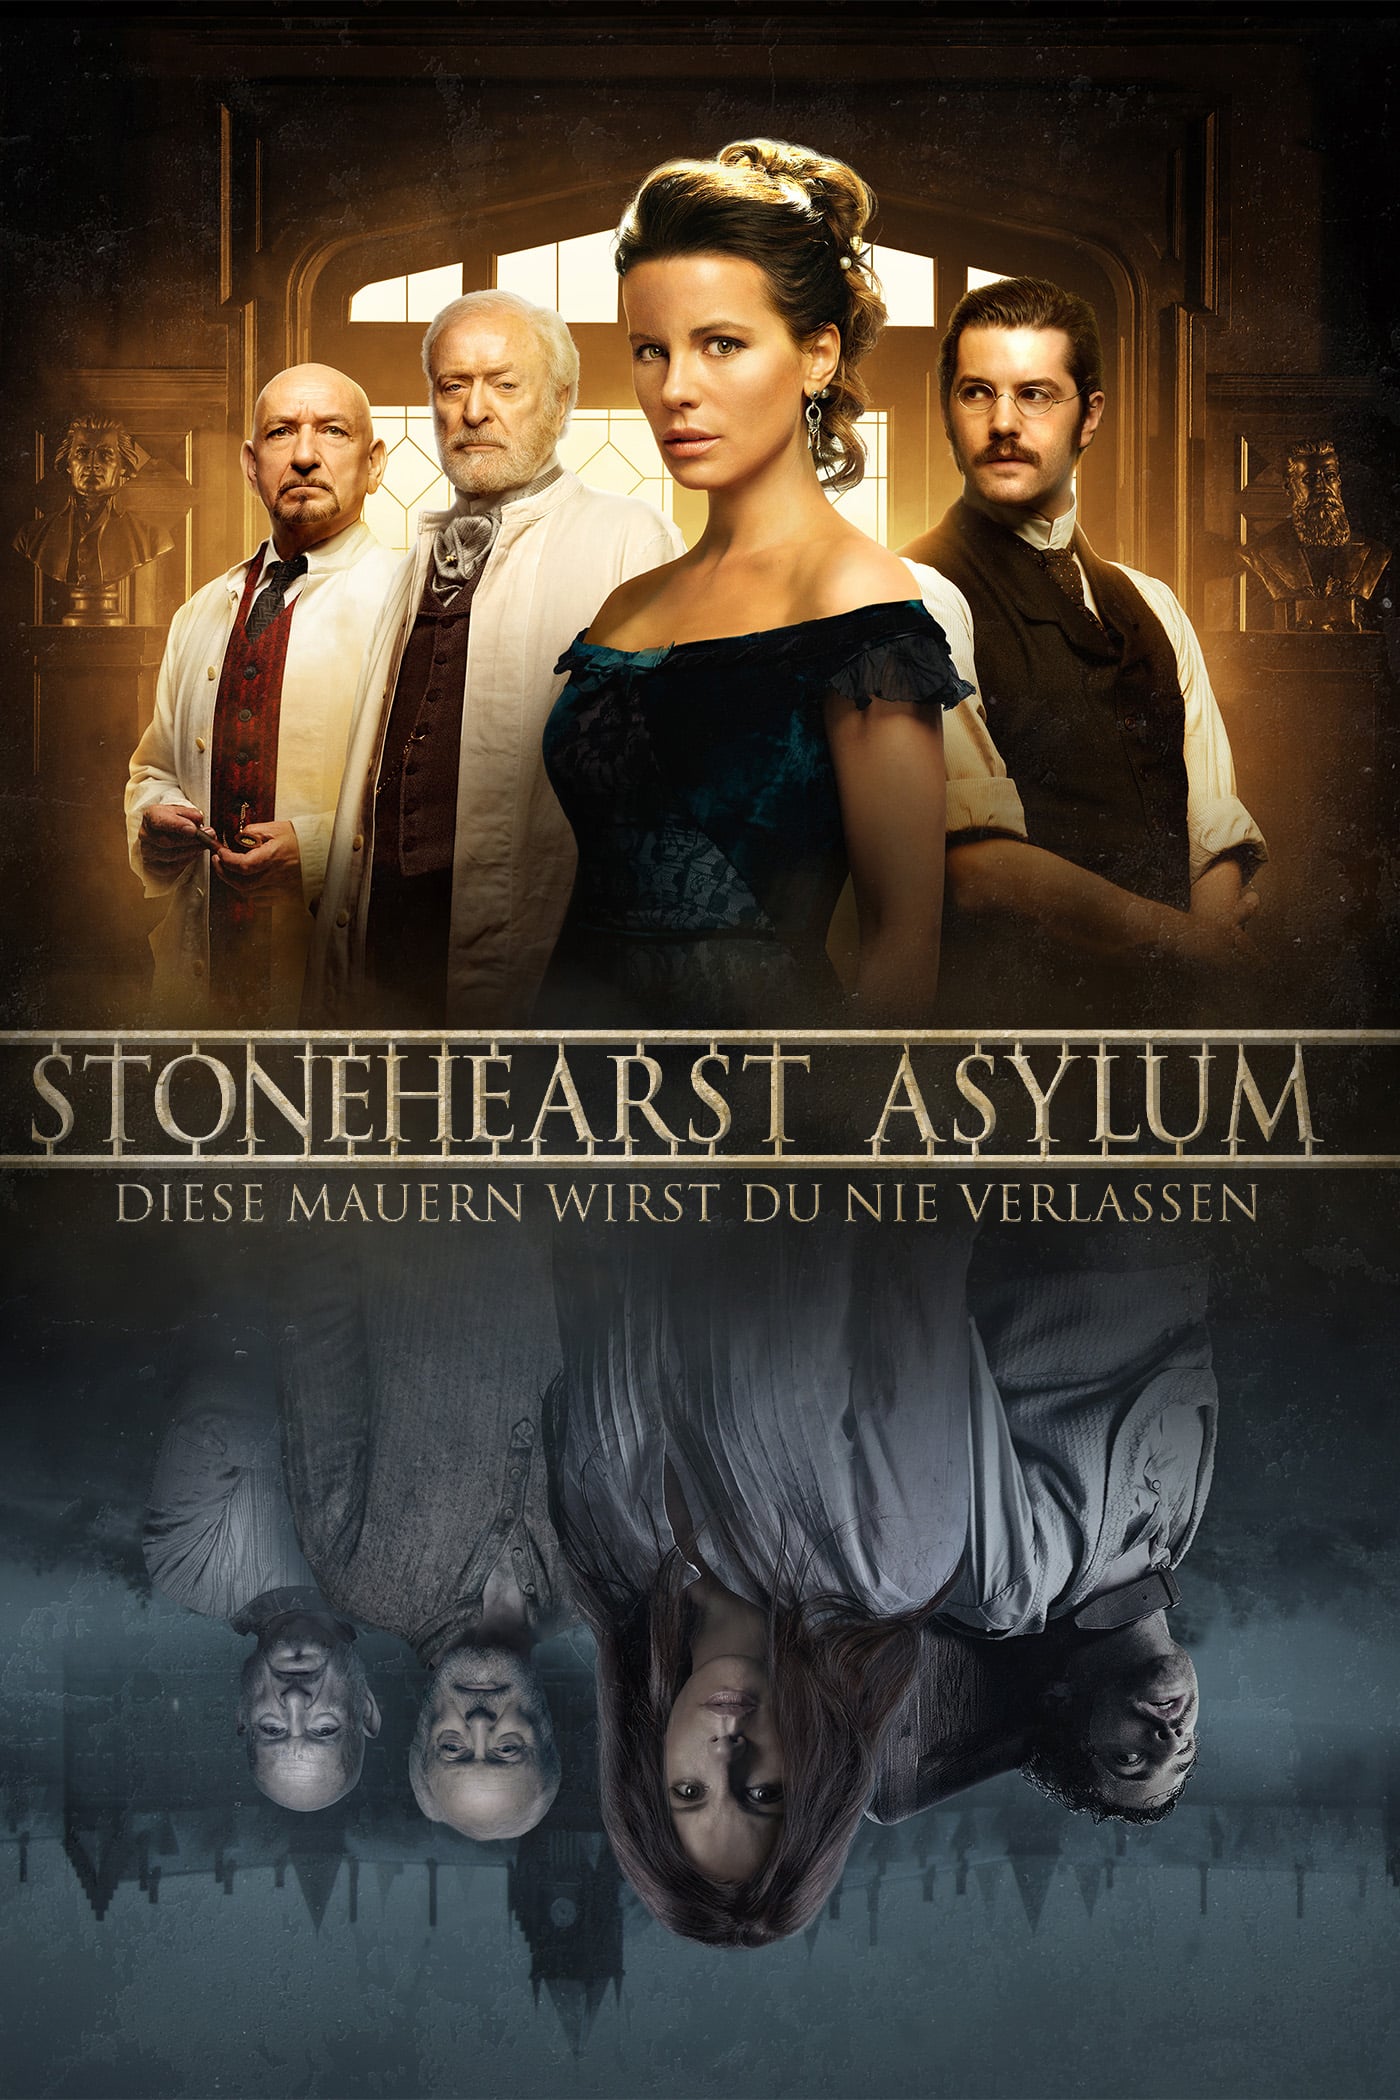 Plakat von "Stonehearst Asylum"